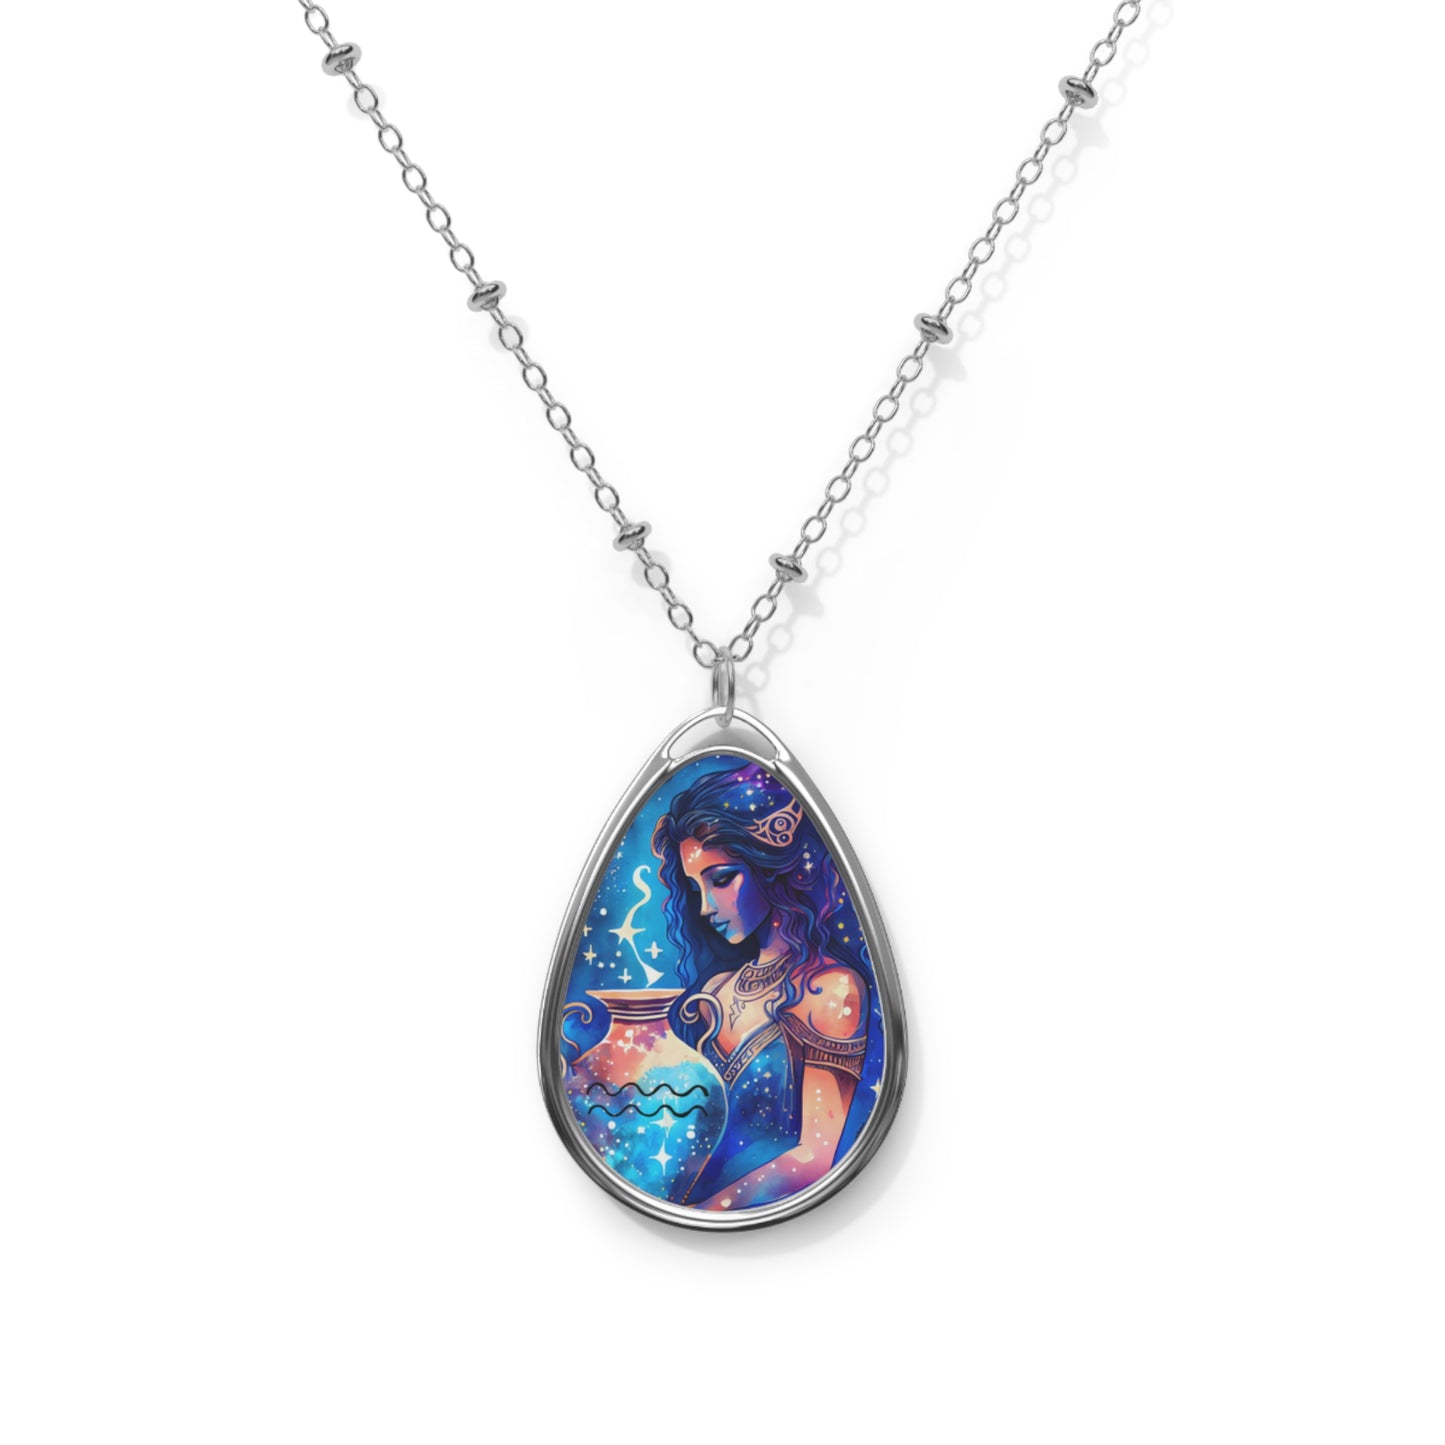 Aquarius Zodiac Sign ~ Aquarius Goddess in Blue ~ Necklace & Oval Pendant With Chain